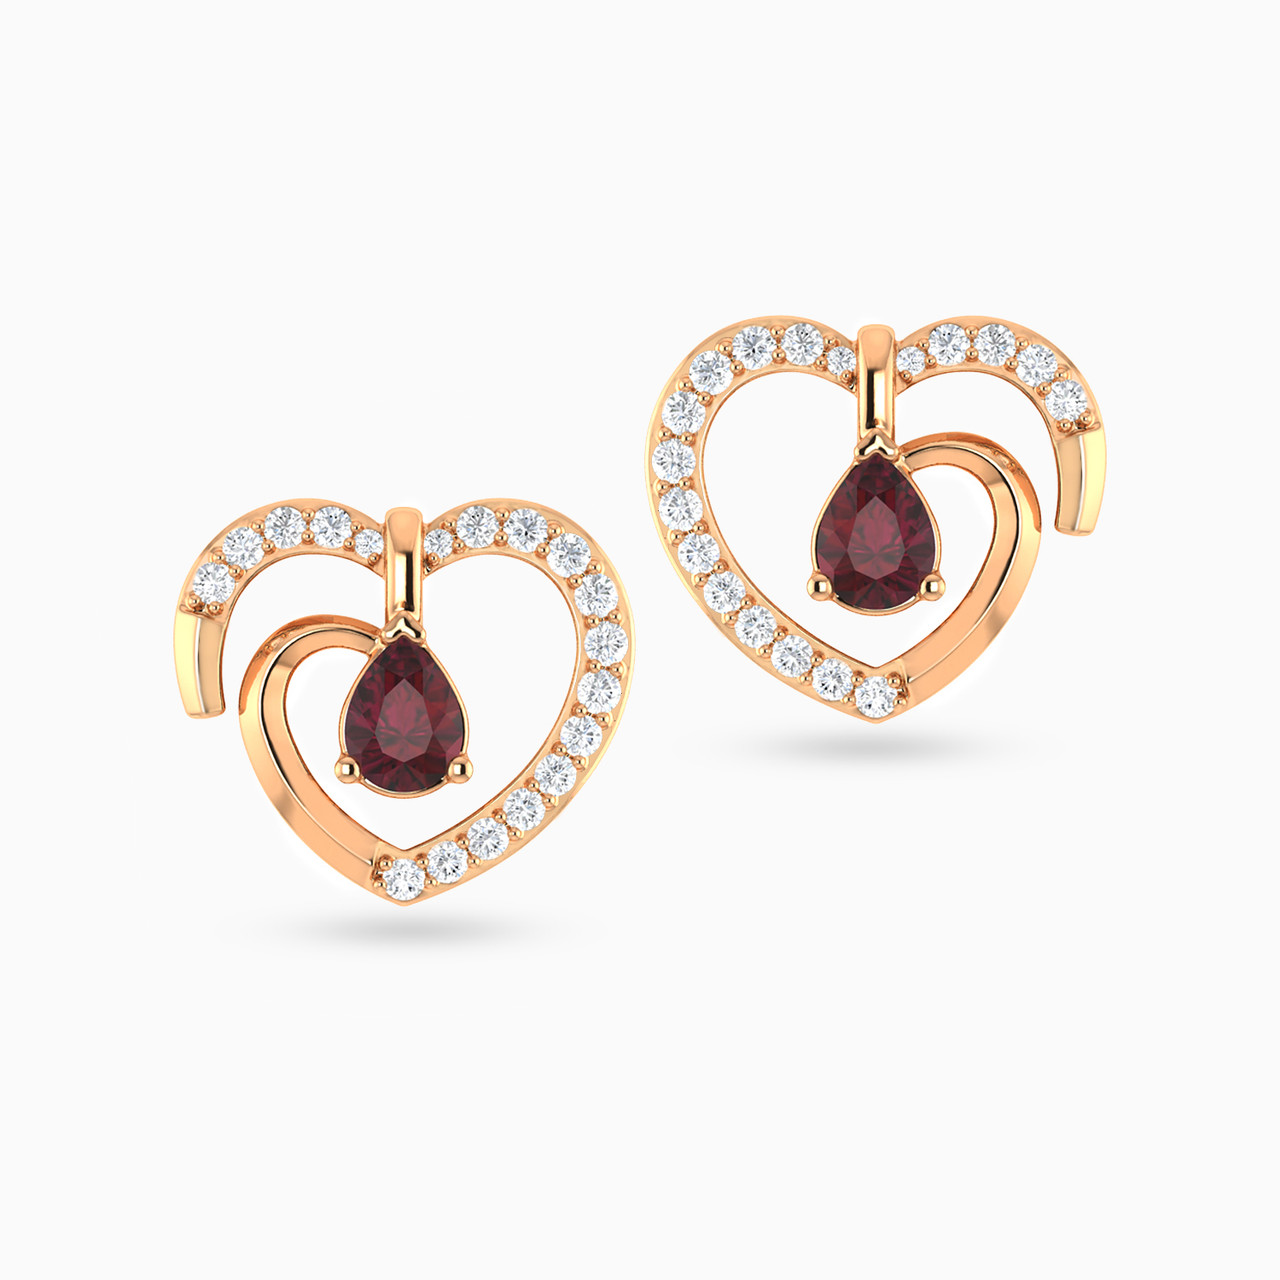 18K Gold Diamond & Colored Stones Stud Earrings